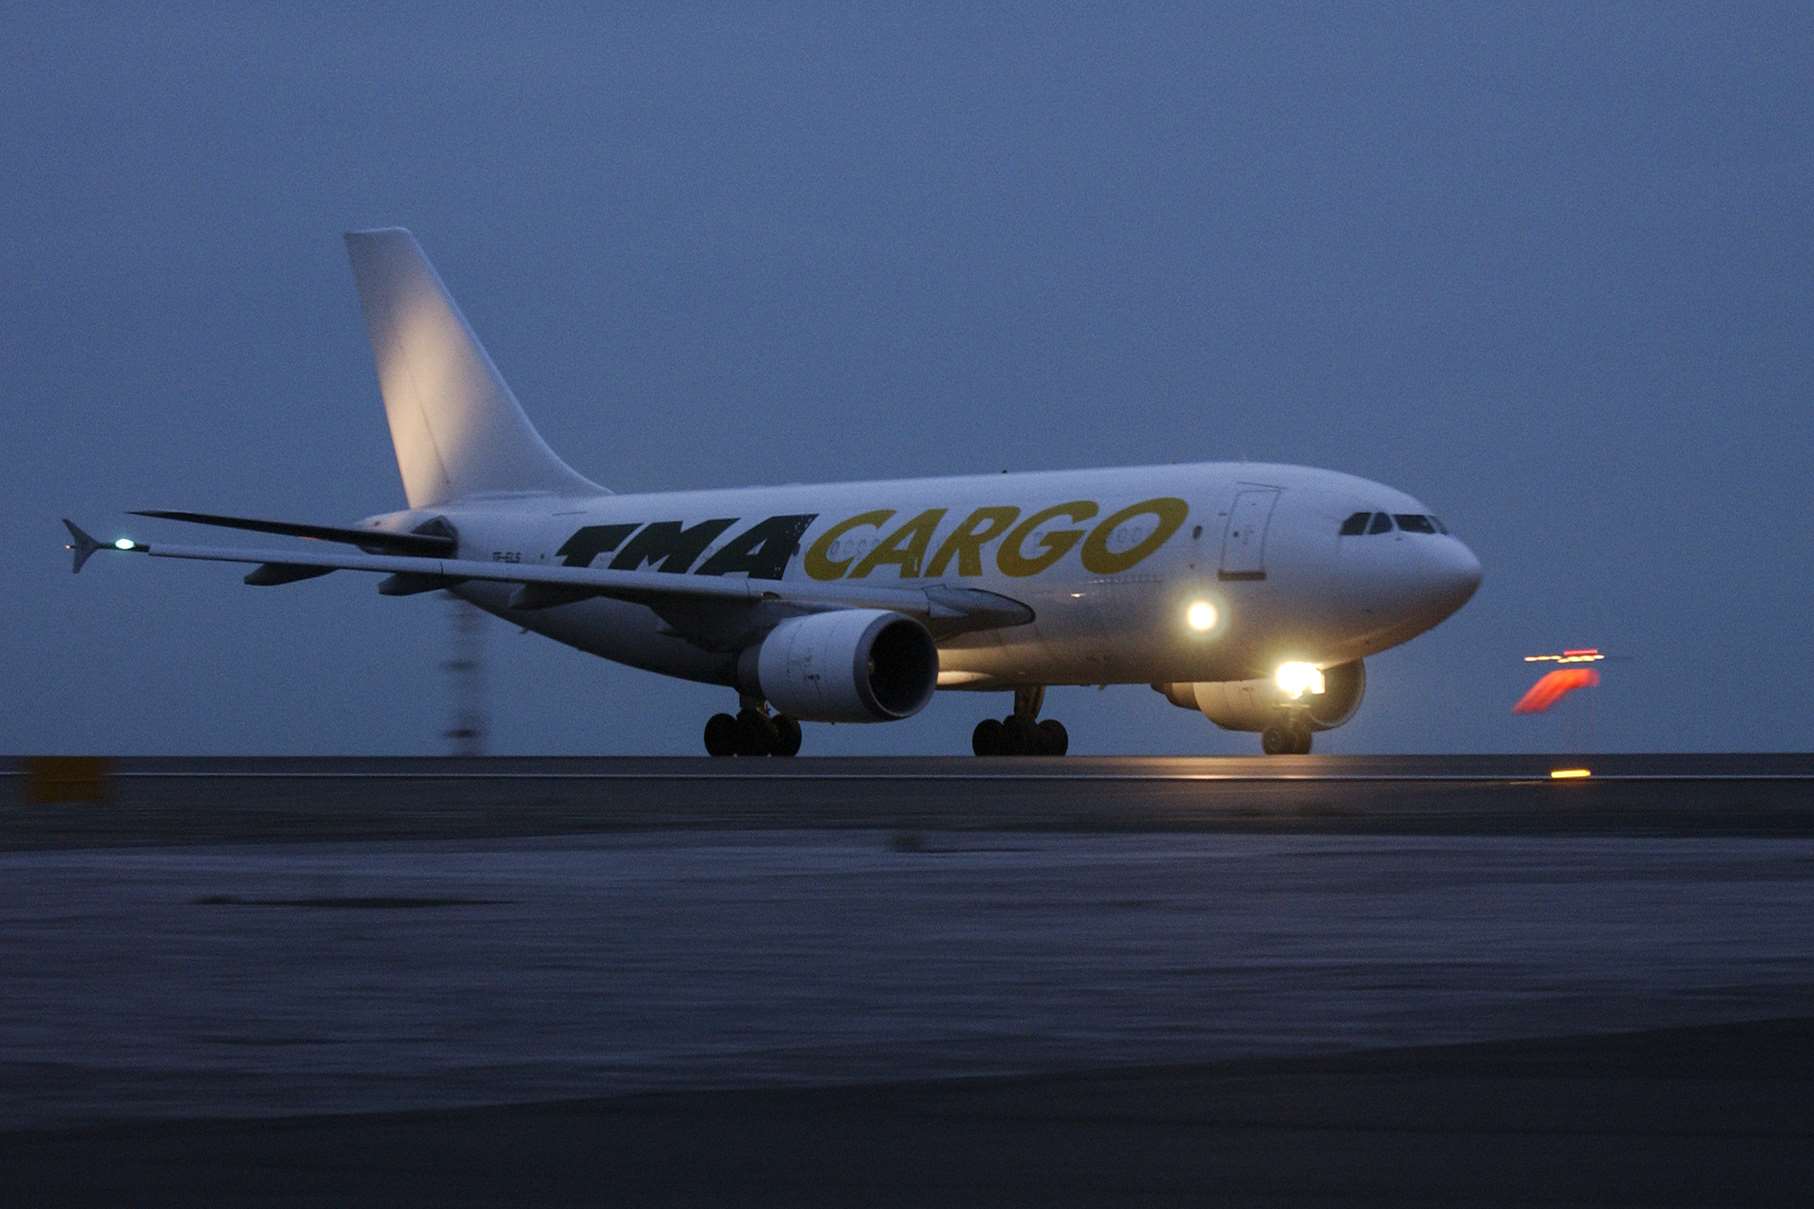 A cargo night flight takes off from Manston airport. Picture: Simon Burchett